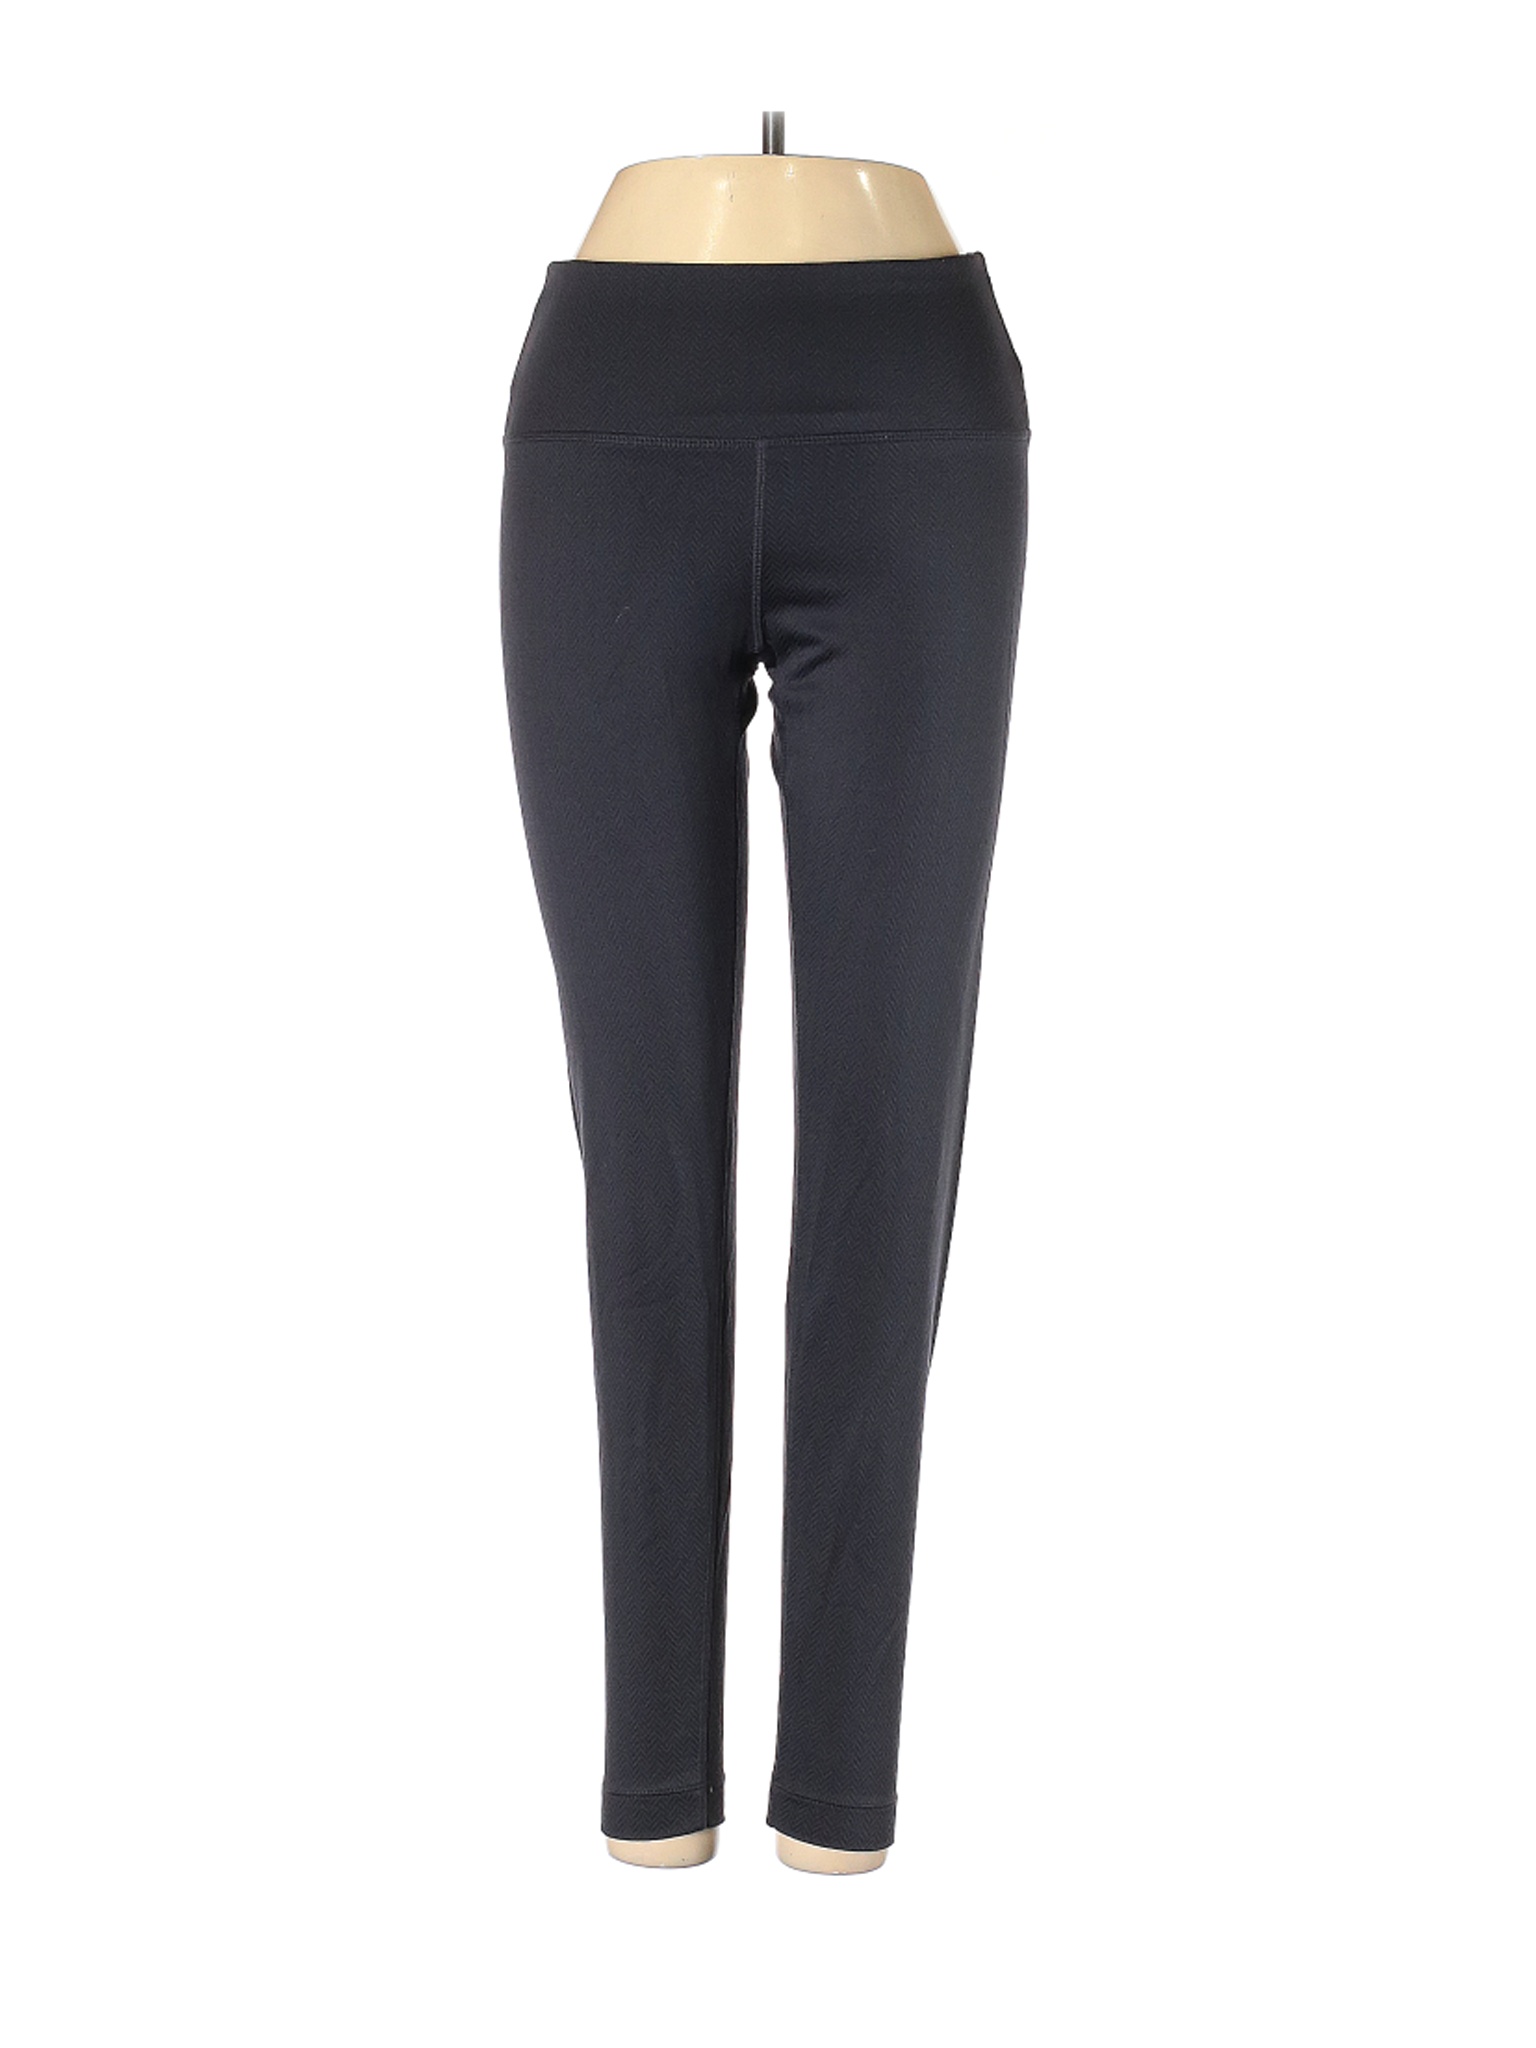 Mondetta Women Black Active Pants XS | eBay